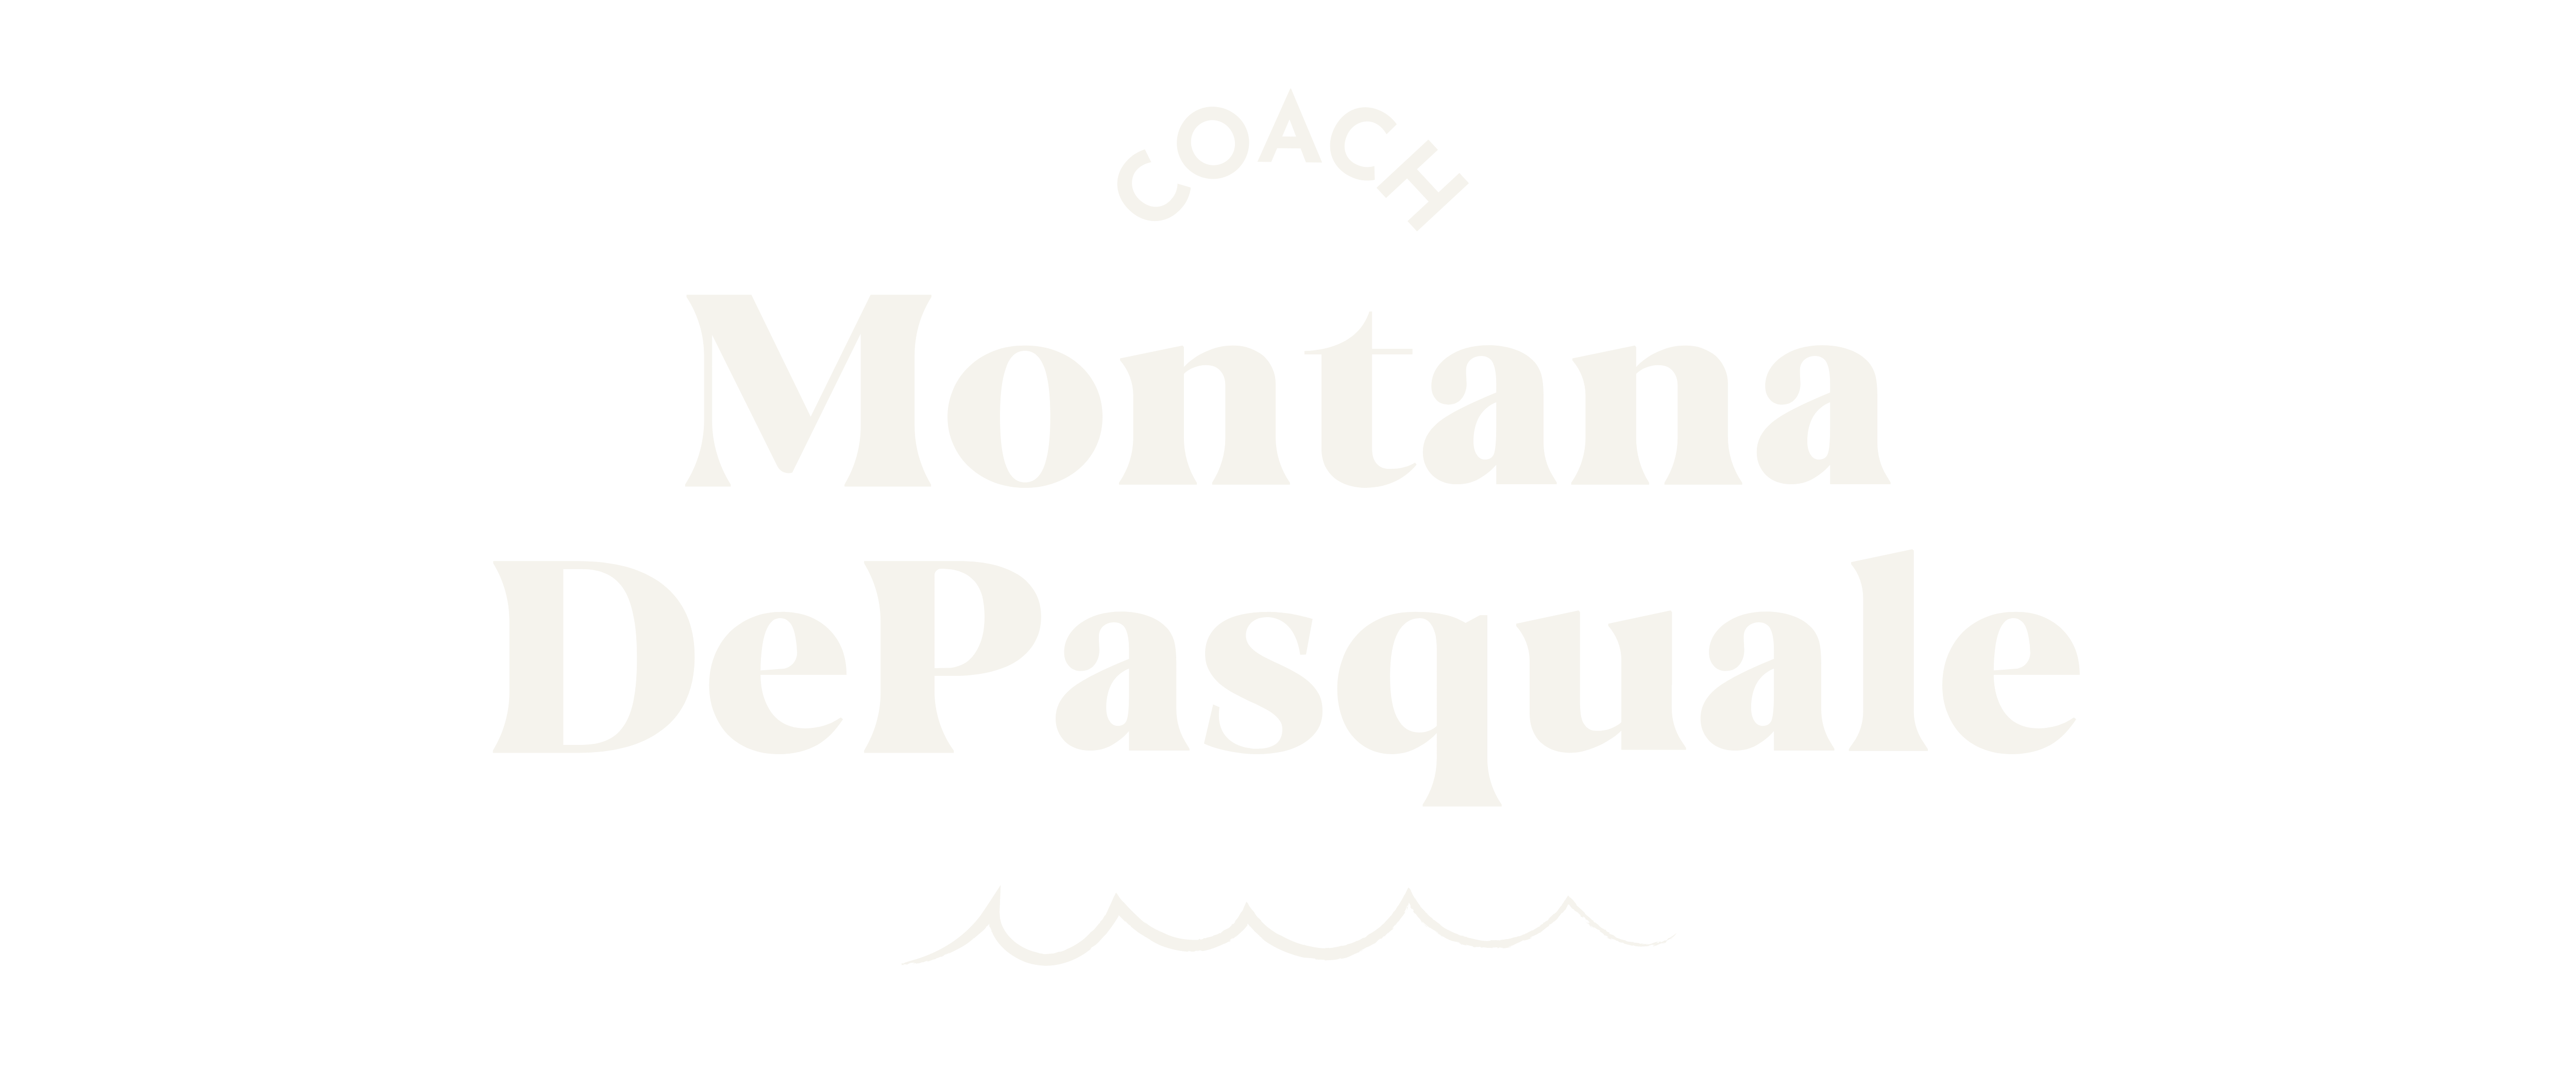 Coach Montana DePasquale